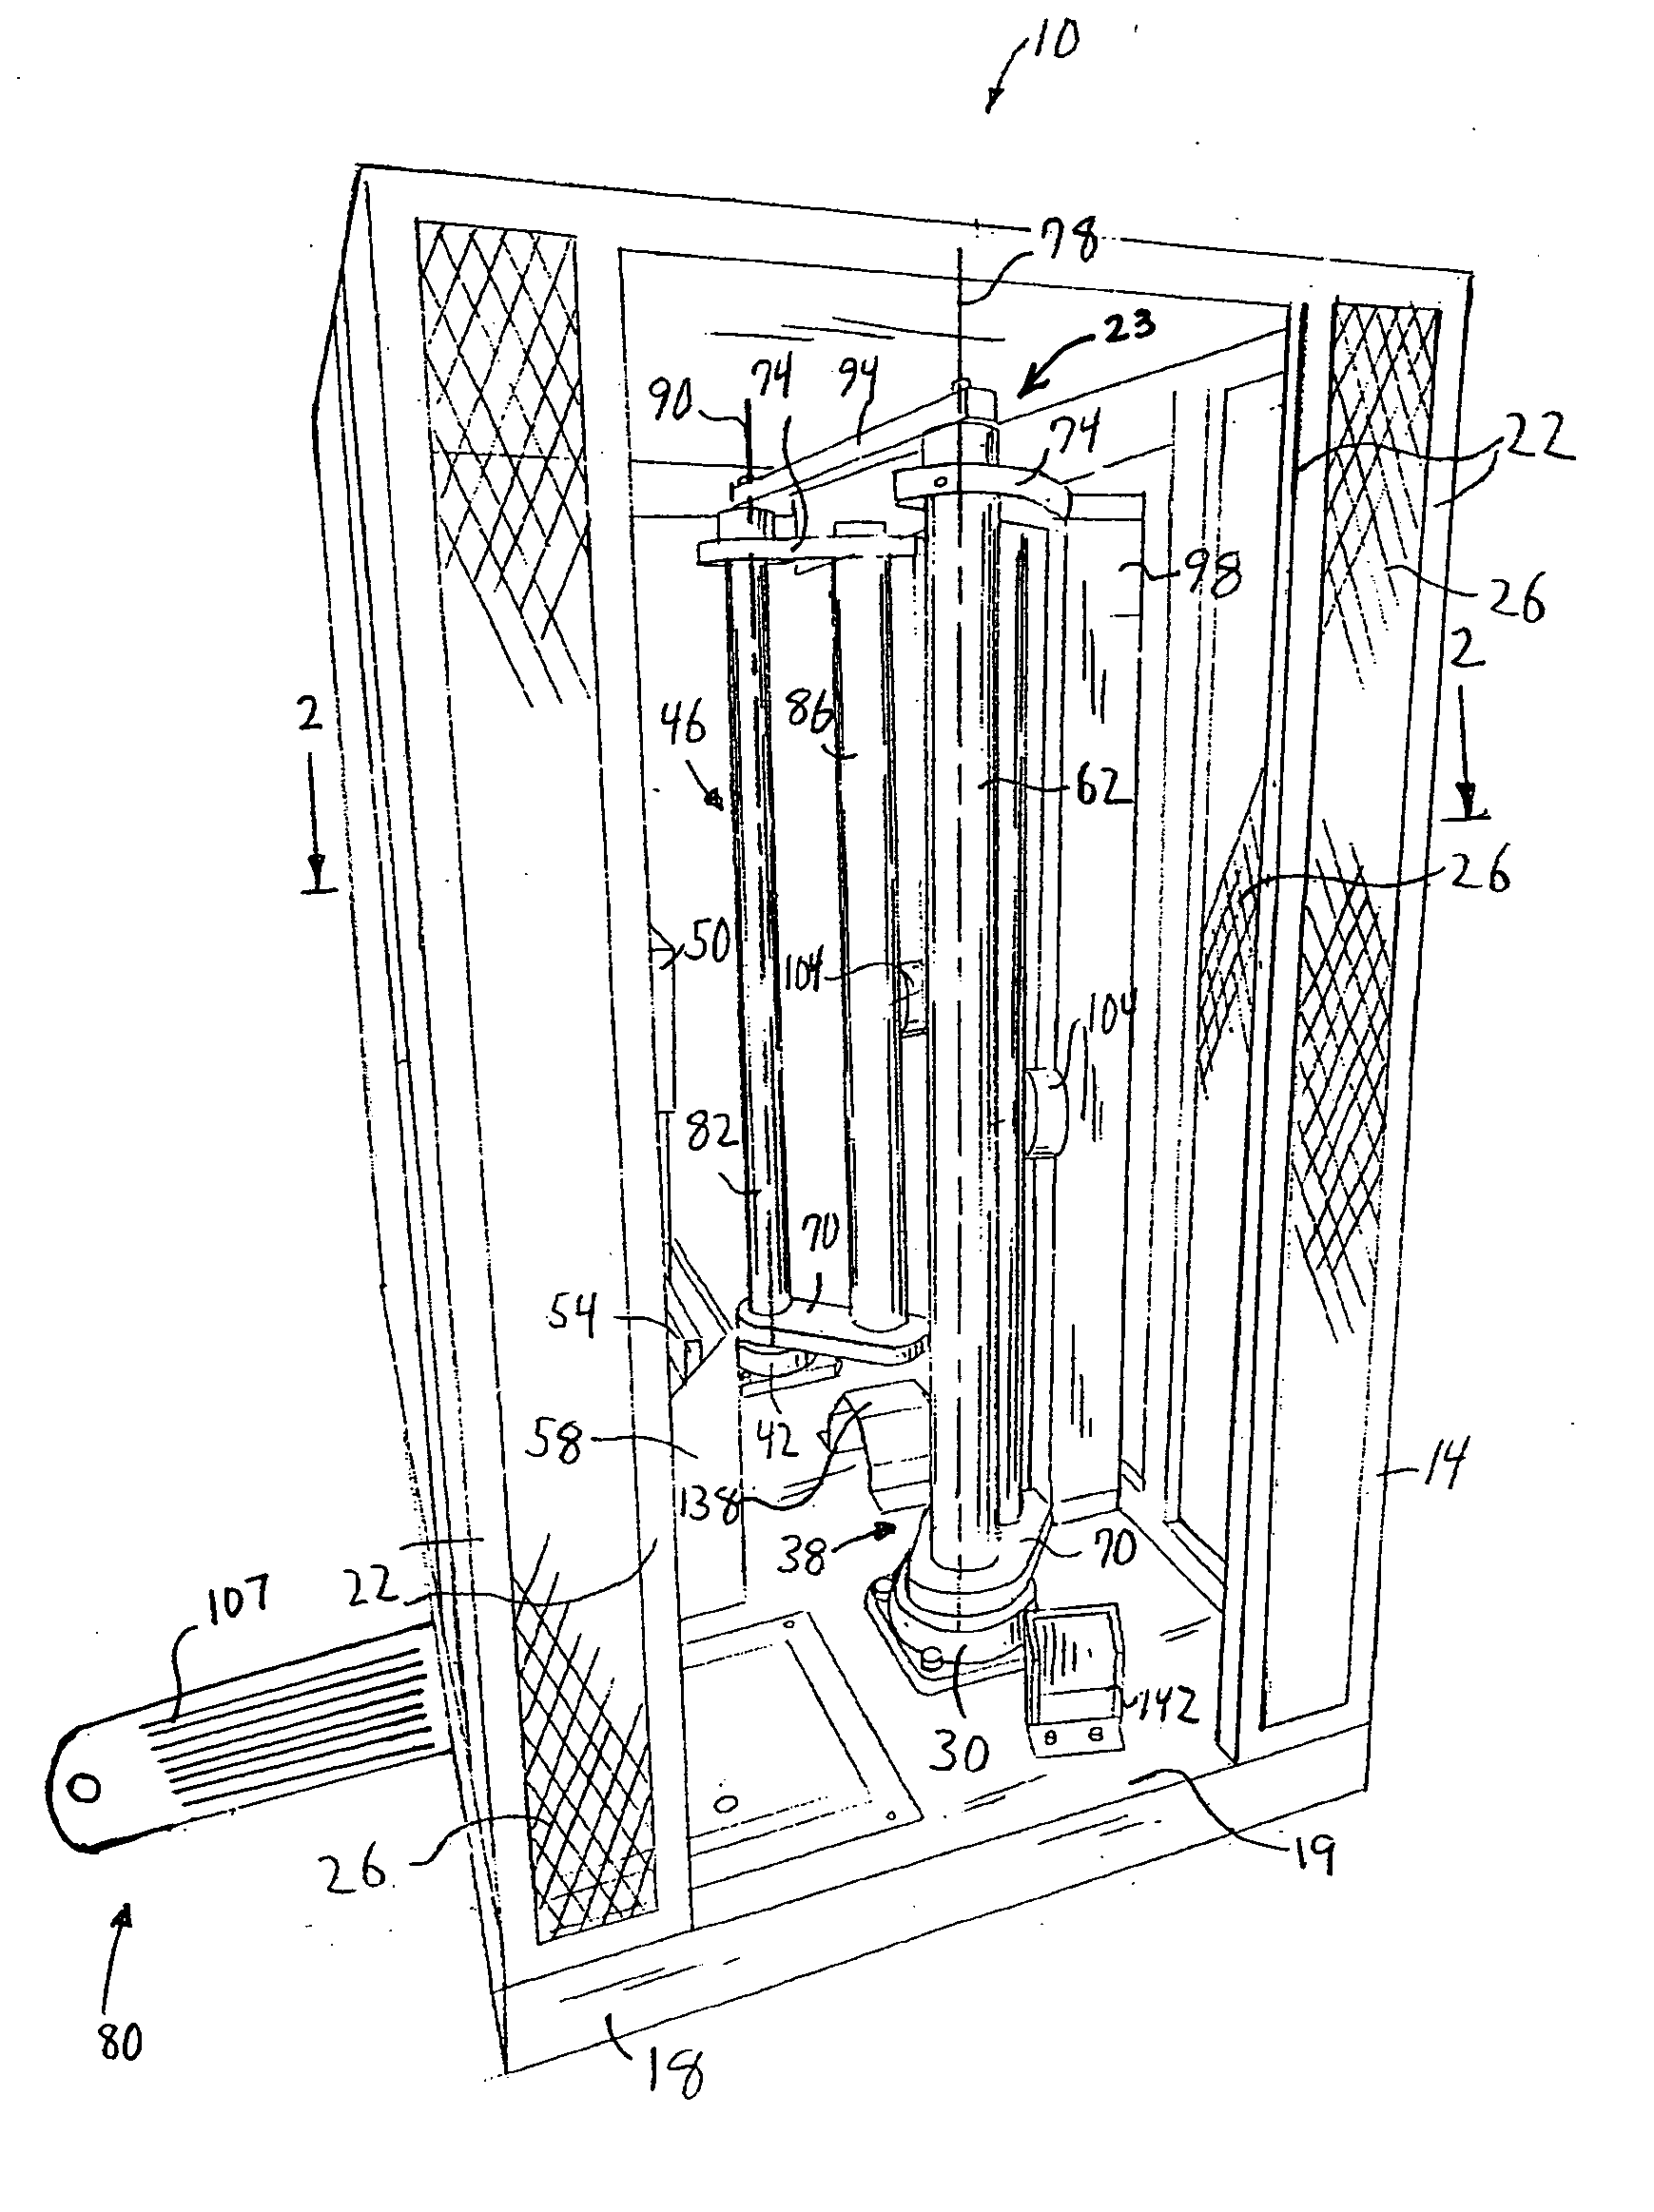 Panel bending machine